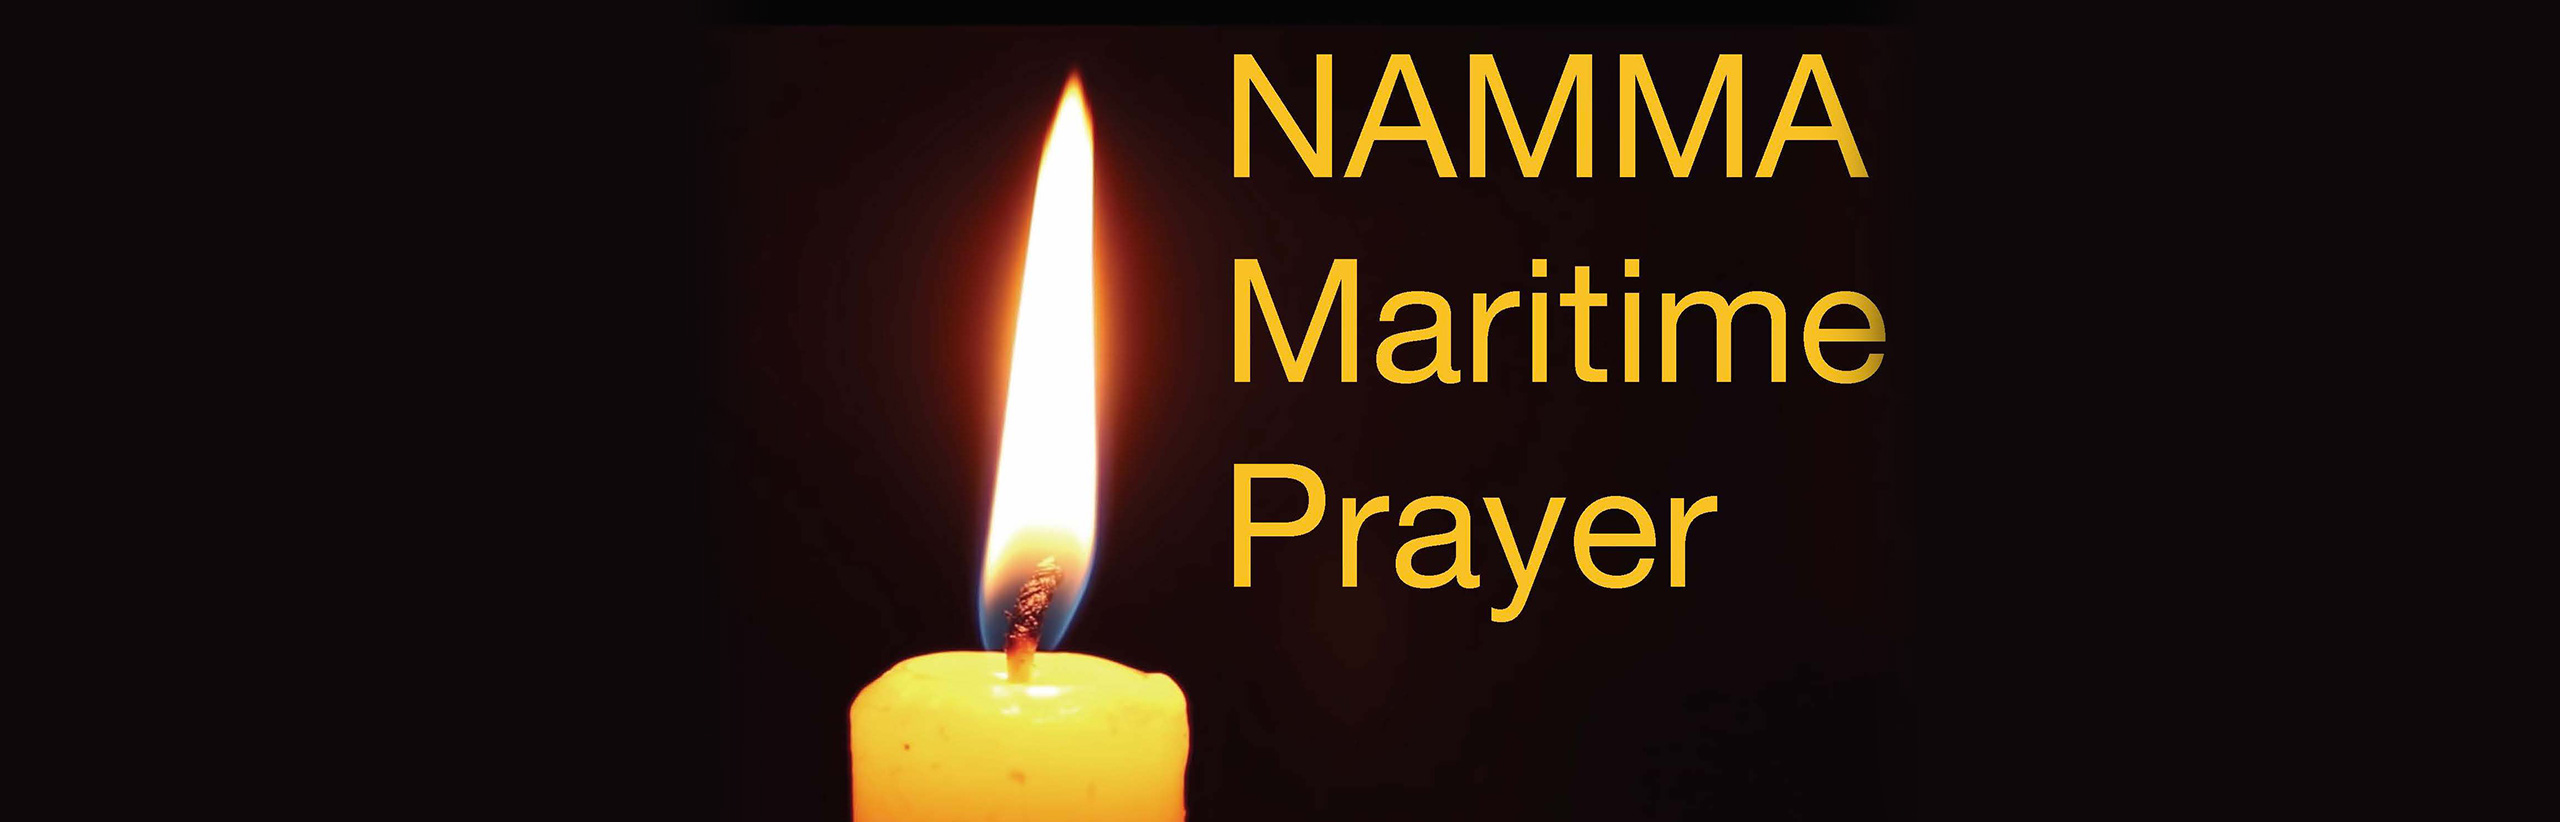 NAMMA-members-praying-online-CHAPLAINCY-COVID-19-ECUMENISM-MARITIME-PRAYER-NAMMA-PRAYER